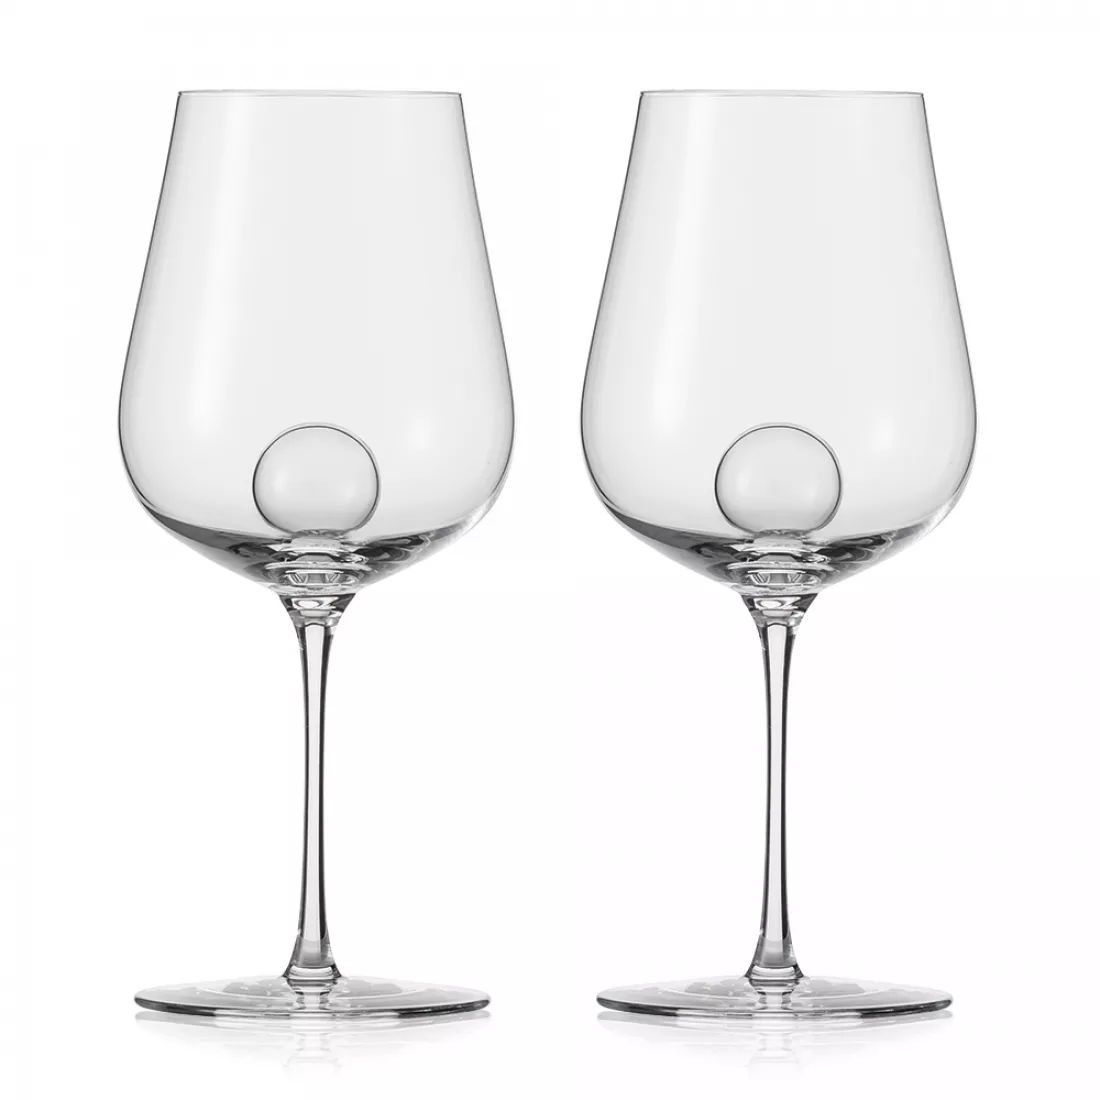 ZWIESEL GLAS Набор бокалов для белого вина CHARDONNAY, ручная работа, объем 441 мл, 2 шт., серия AIR Sense